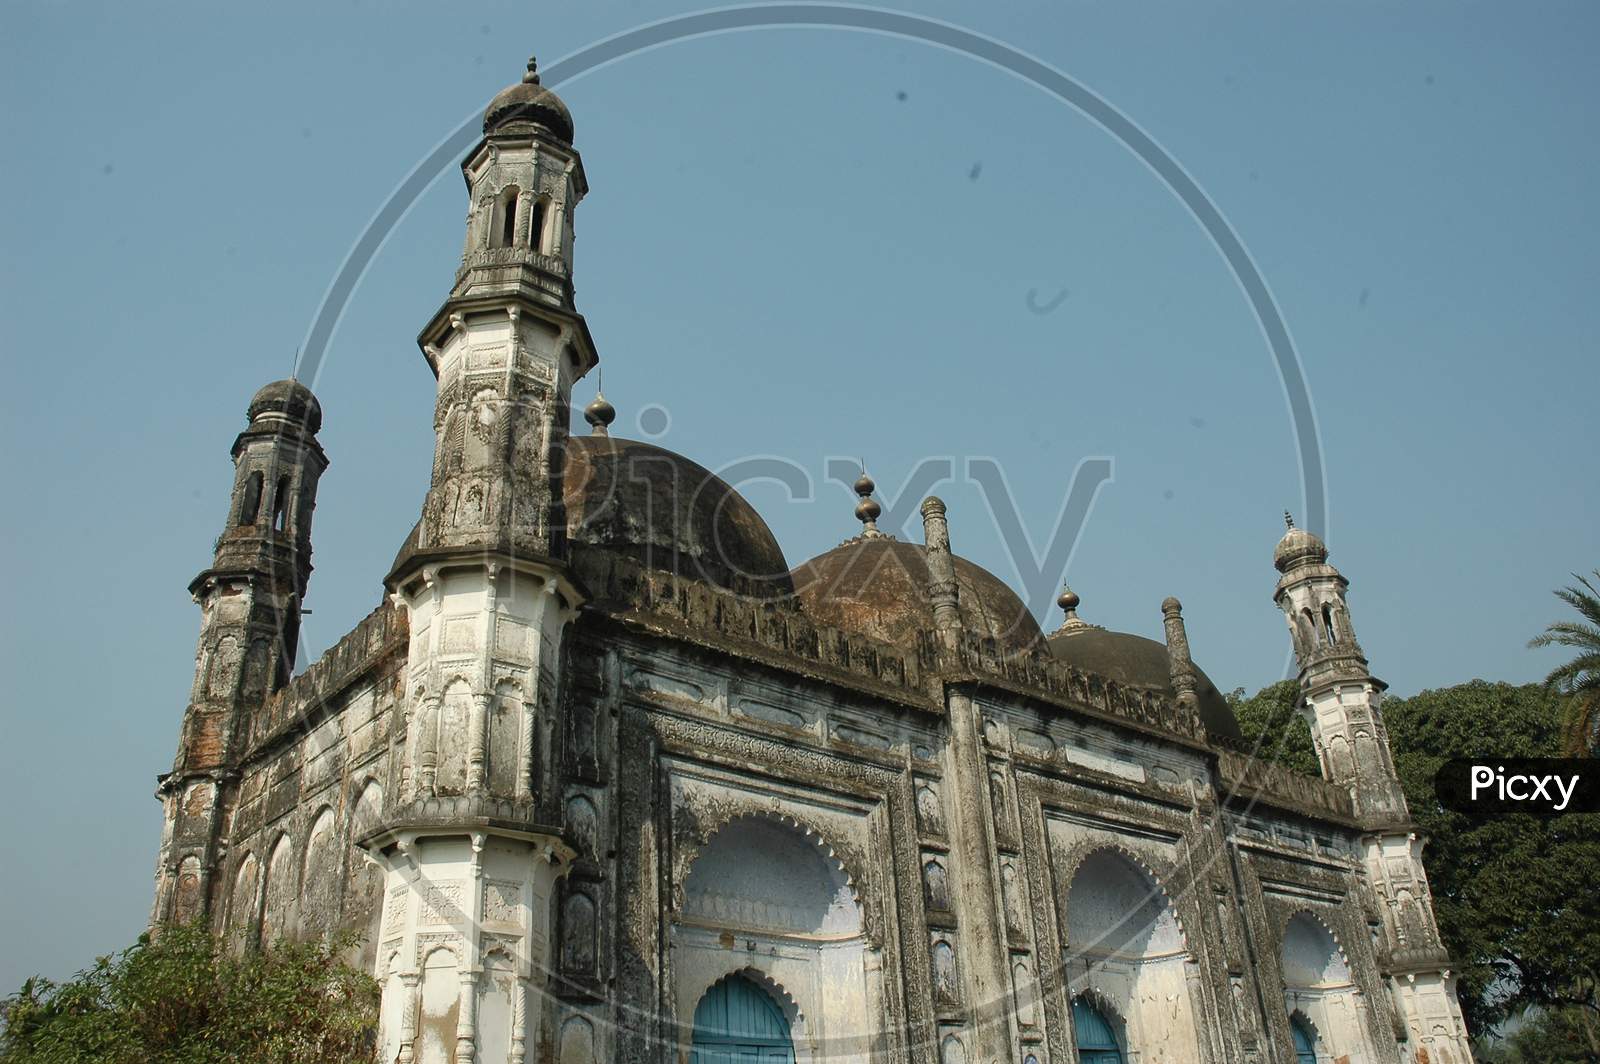 Architecture of Motijhil Jama Masjid